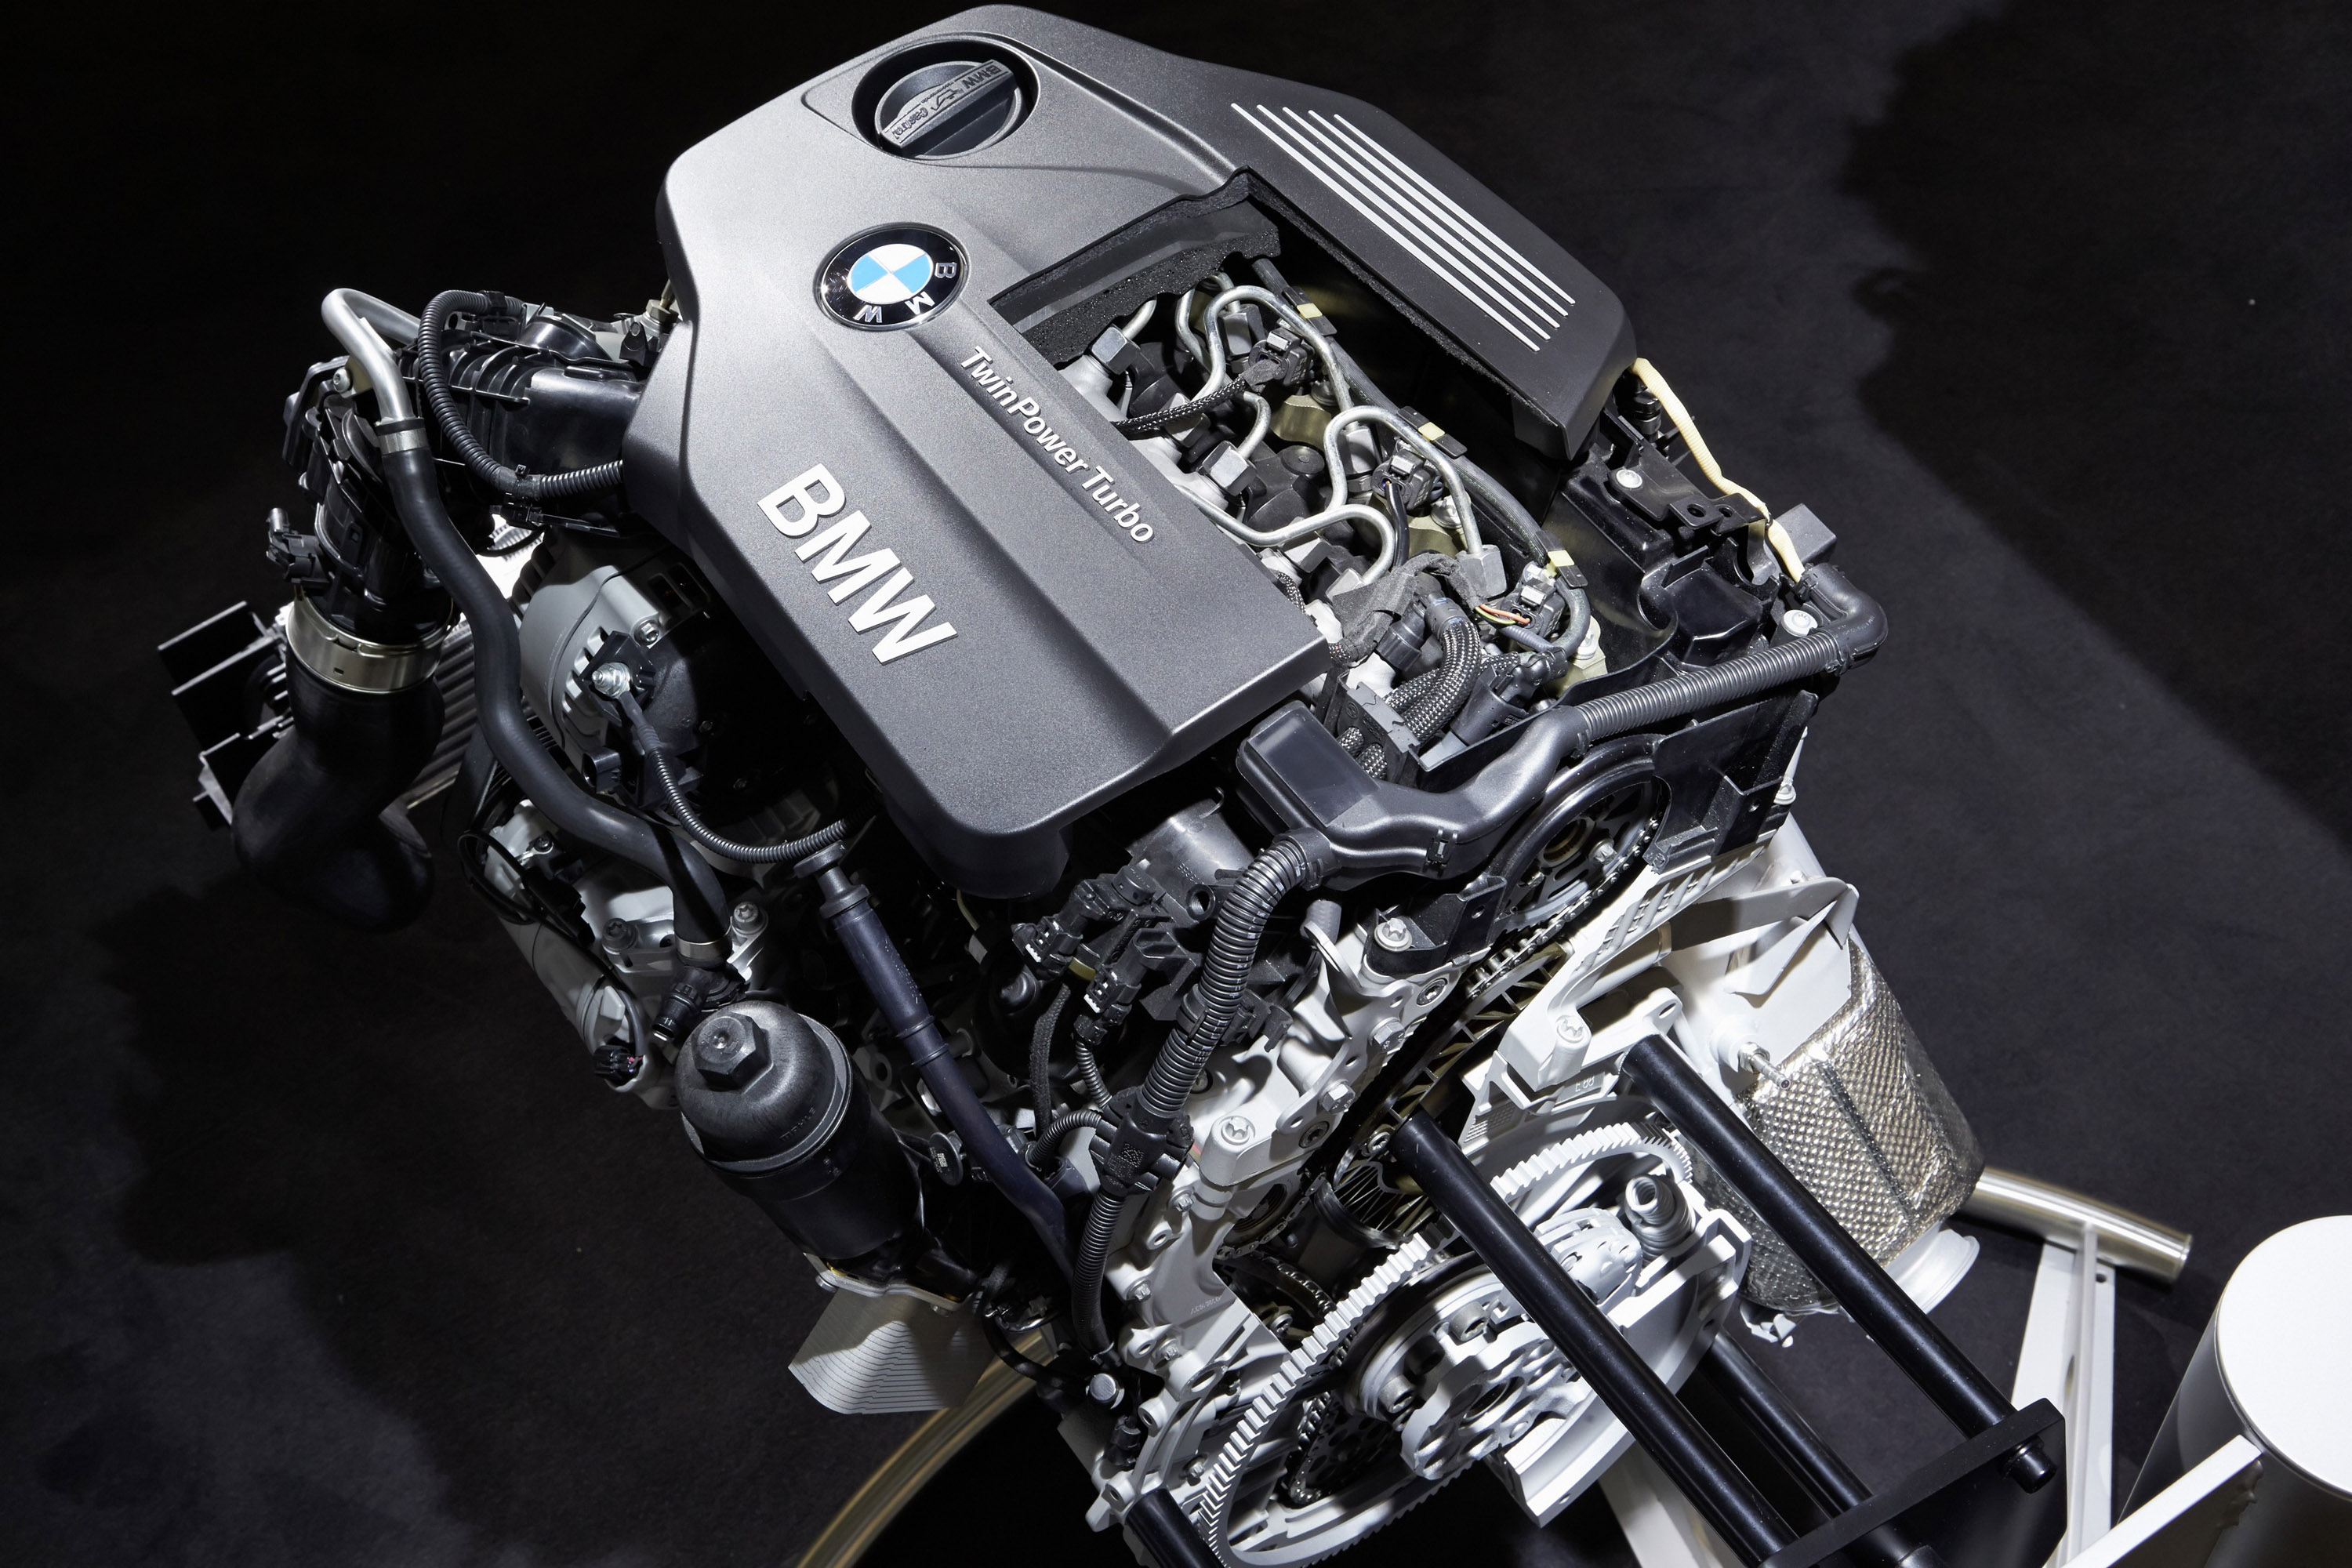 BMW 3 Series Plug-in Hybrid Prototype